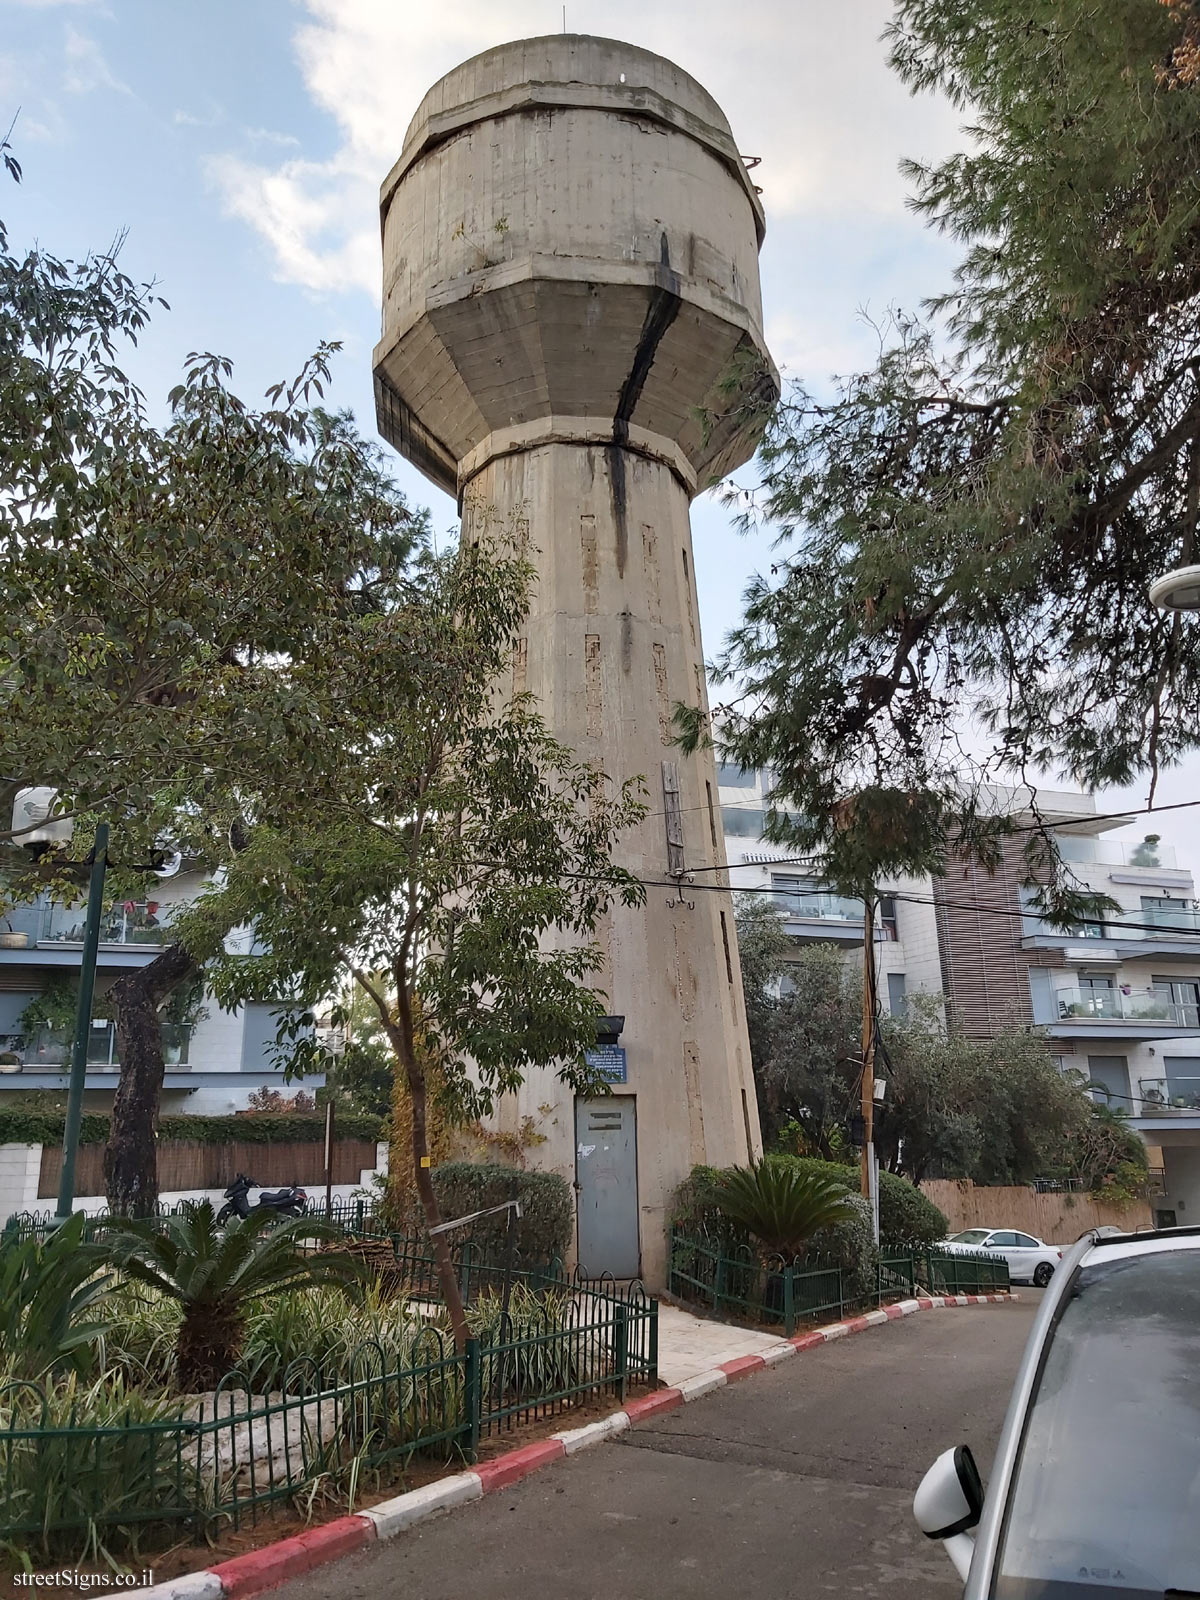 Heritage Sites in Israel - Water tower - HaMigdal St 33, Giv’atayim, Israel